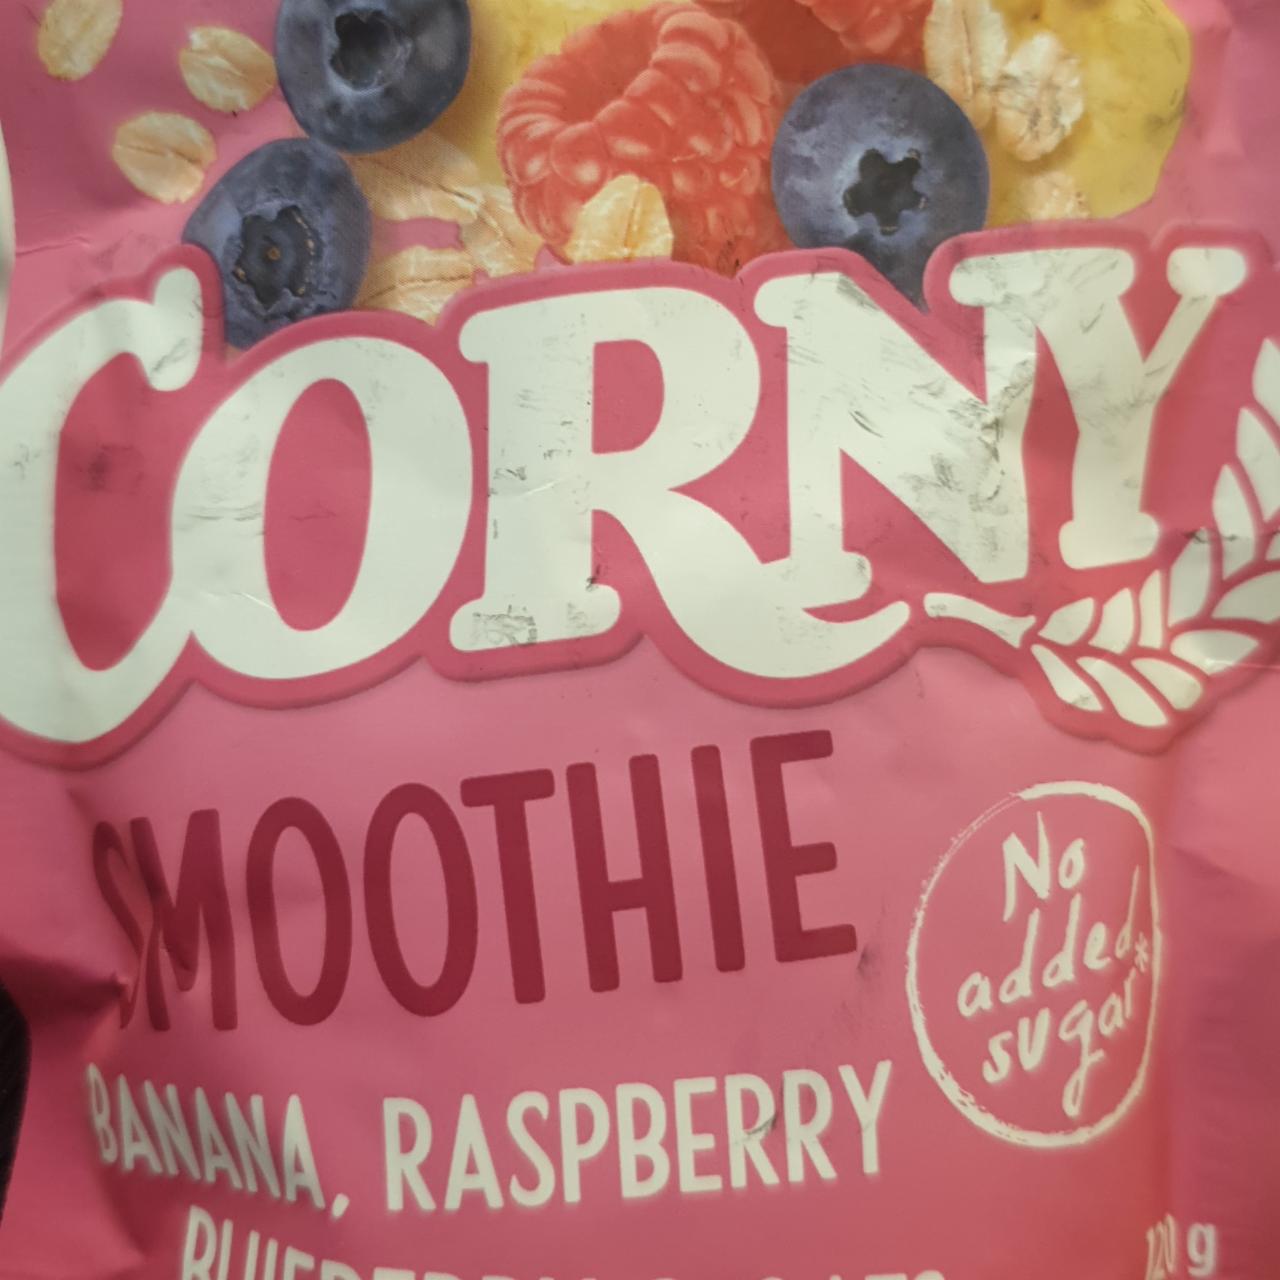 Fotografie - smoothie, banana, rapsberry, blueberry&oats Corny